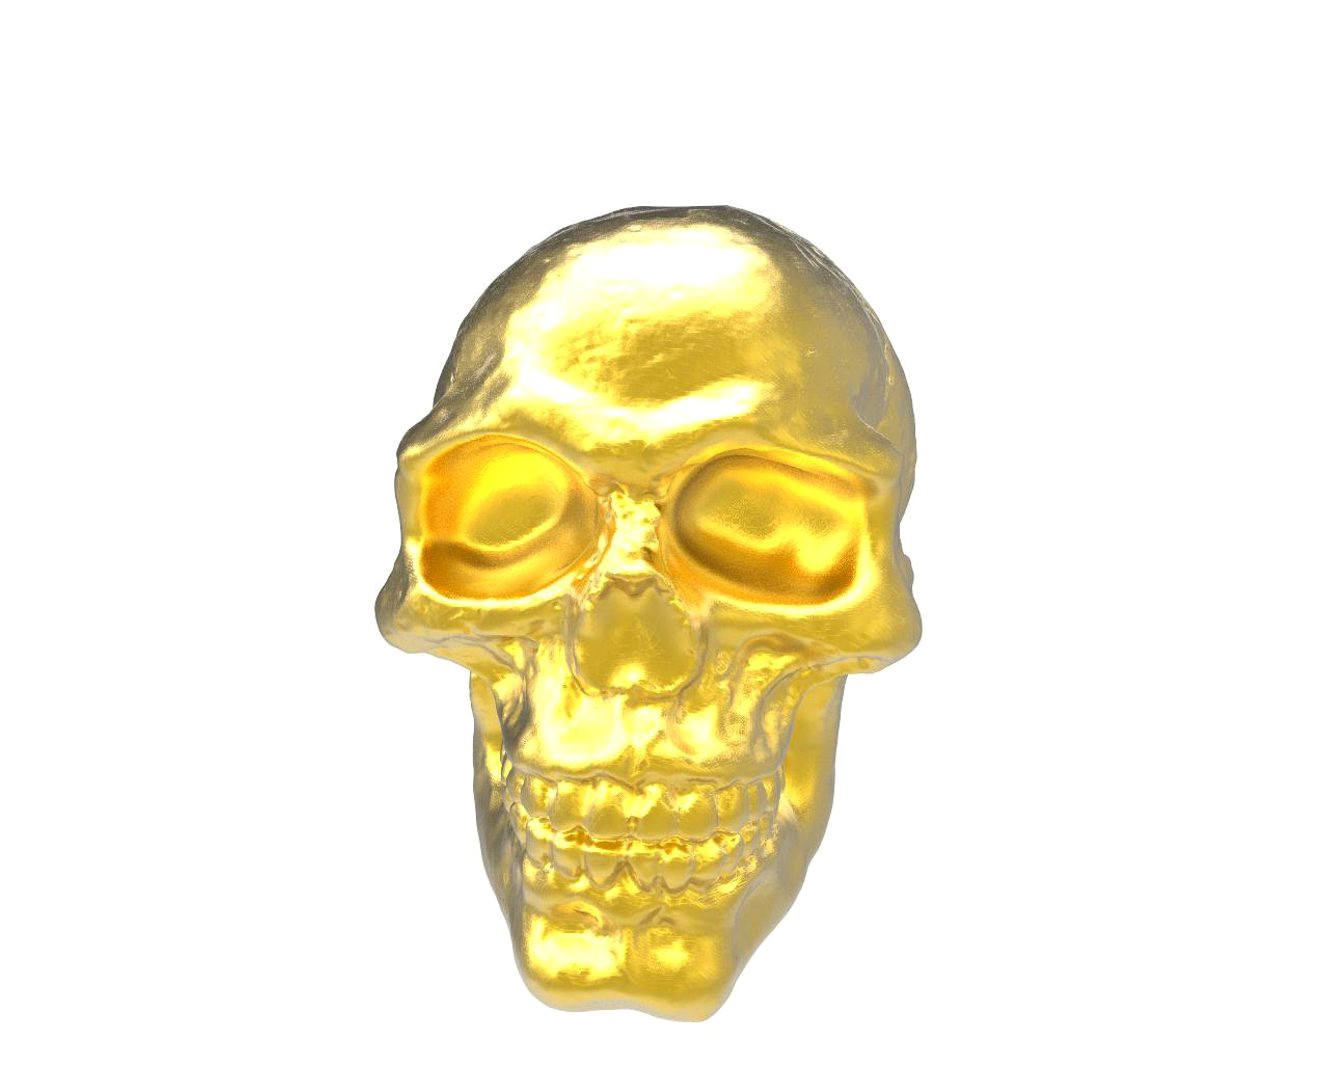 Modified skull